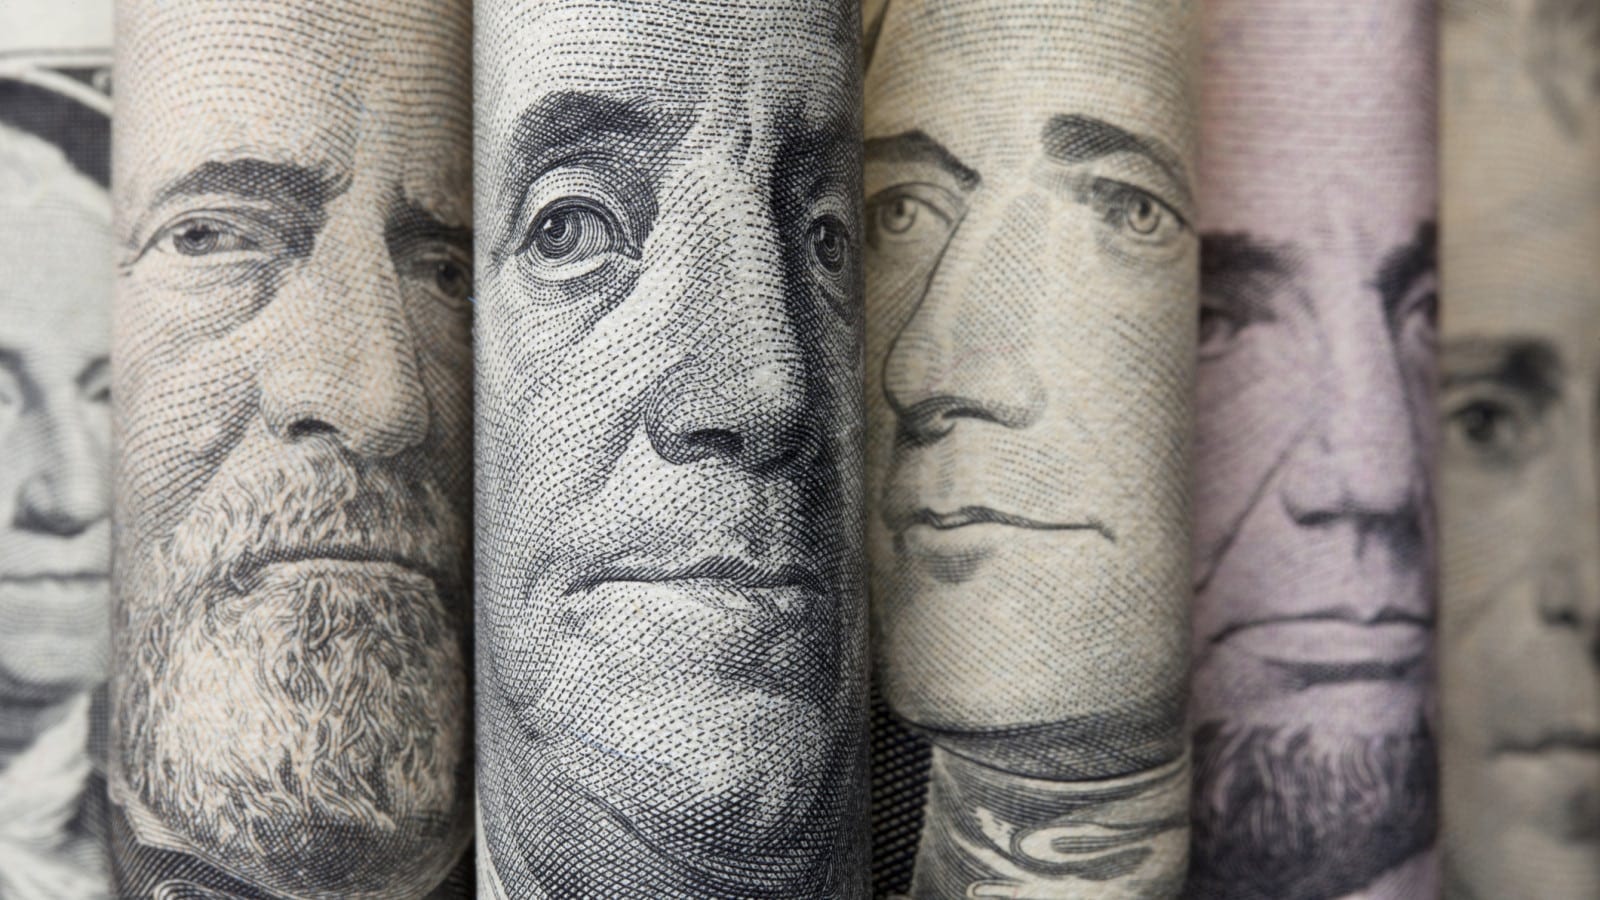 Portraits of U.S. presidents on dollar bills.